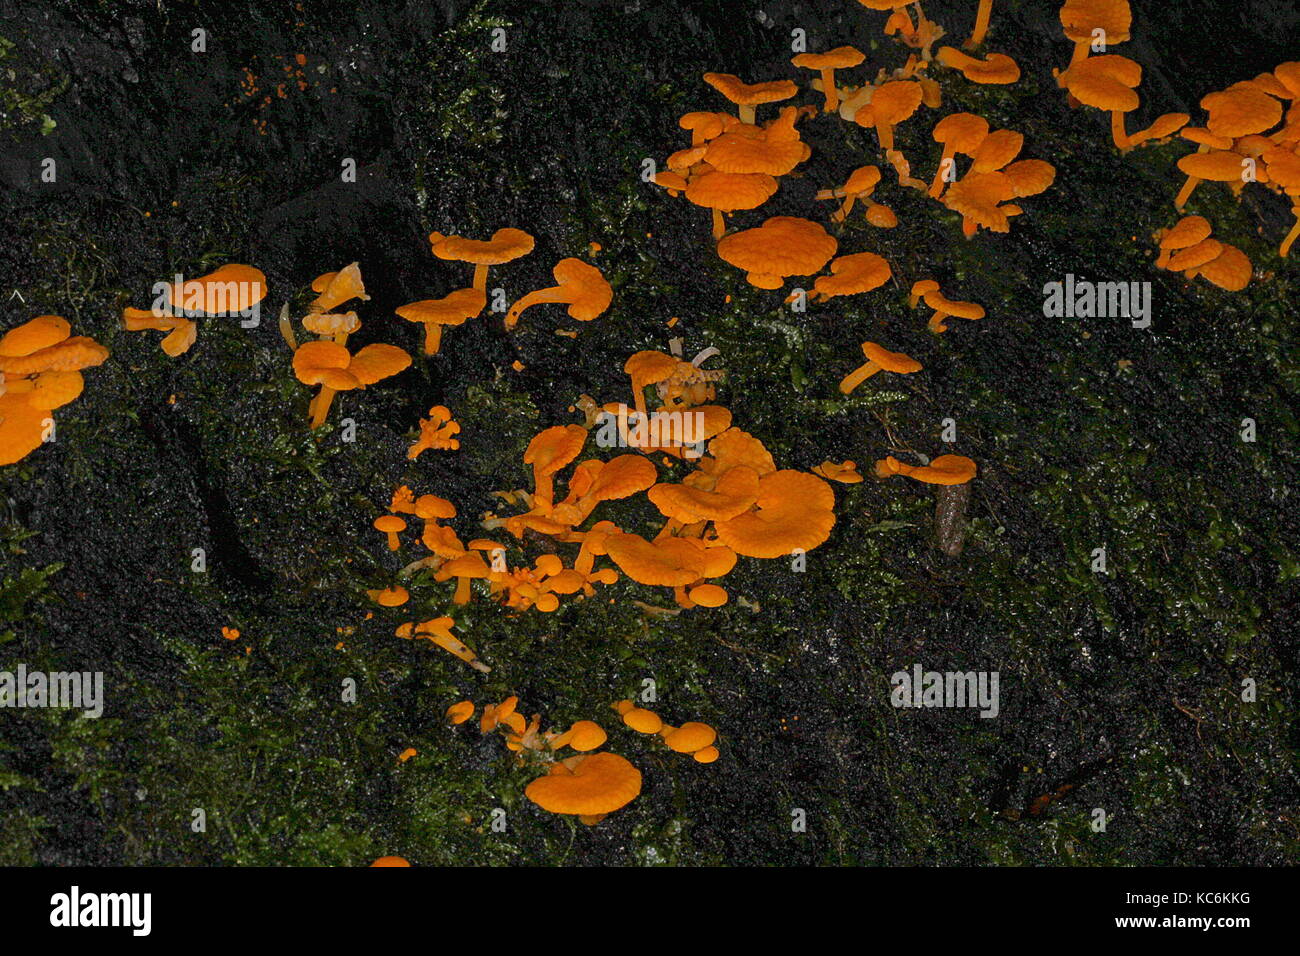 New Zealand fungi Stock Photo